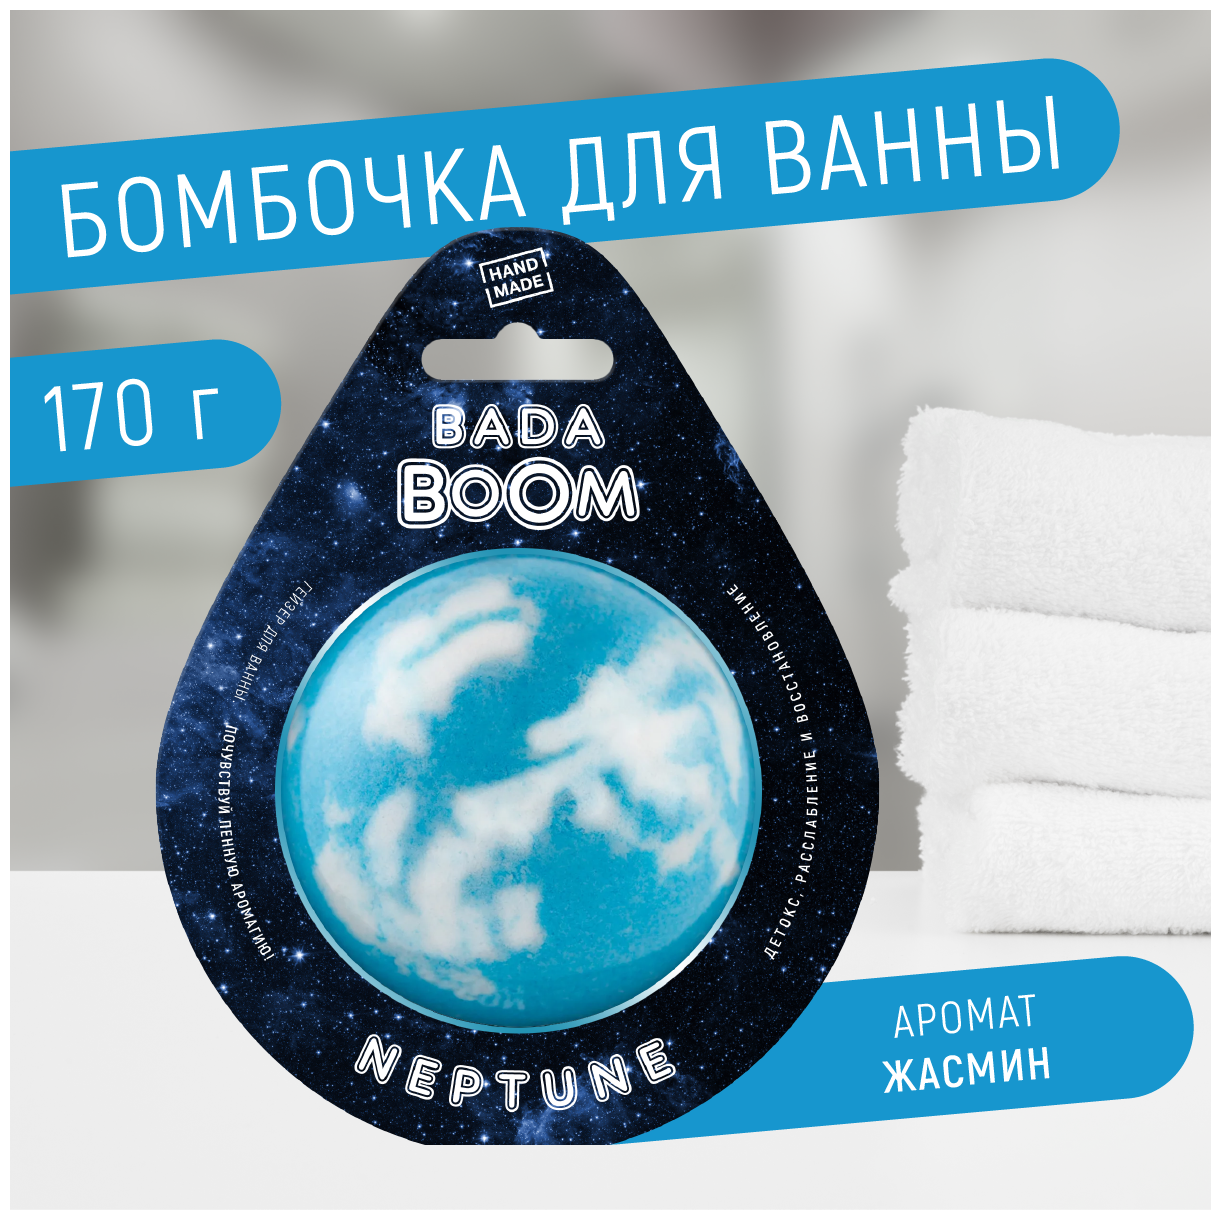 Бомбочка для ванны BADA BOOM эко гейзер NEPTUNE жасмин, 170 г